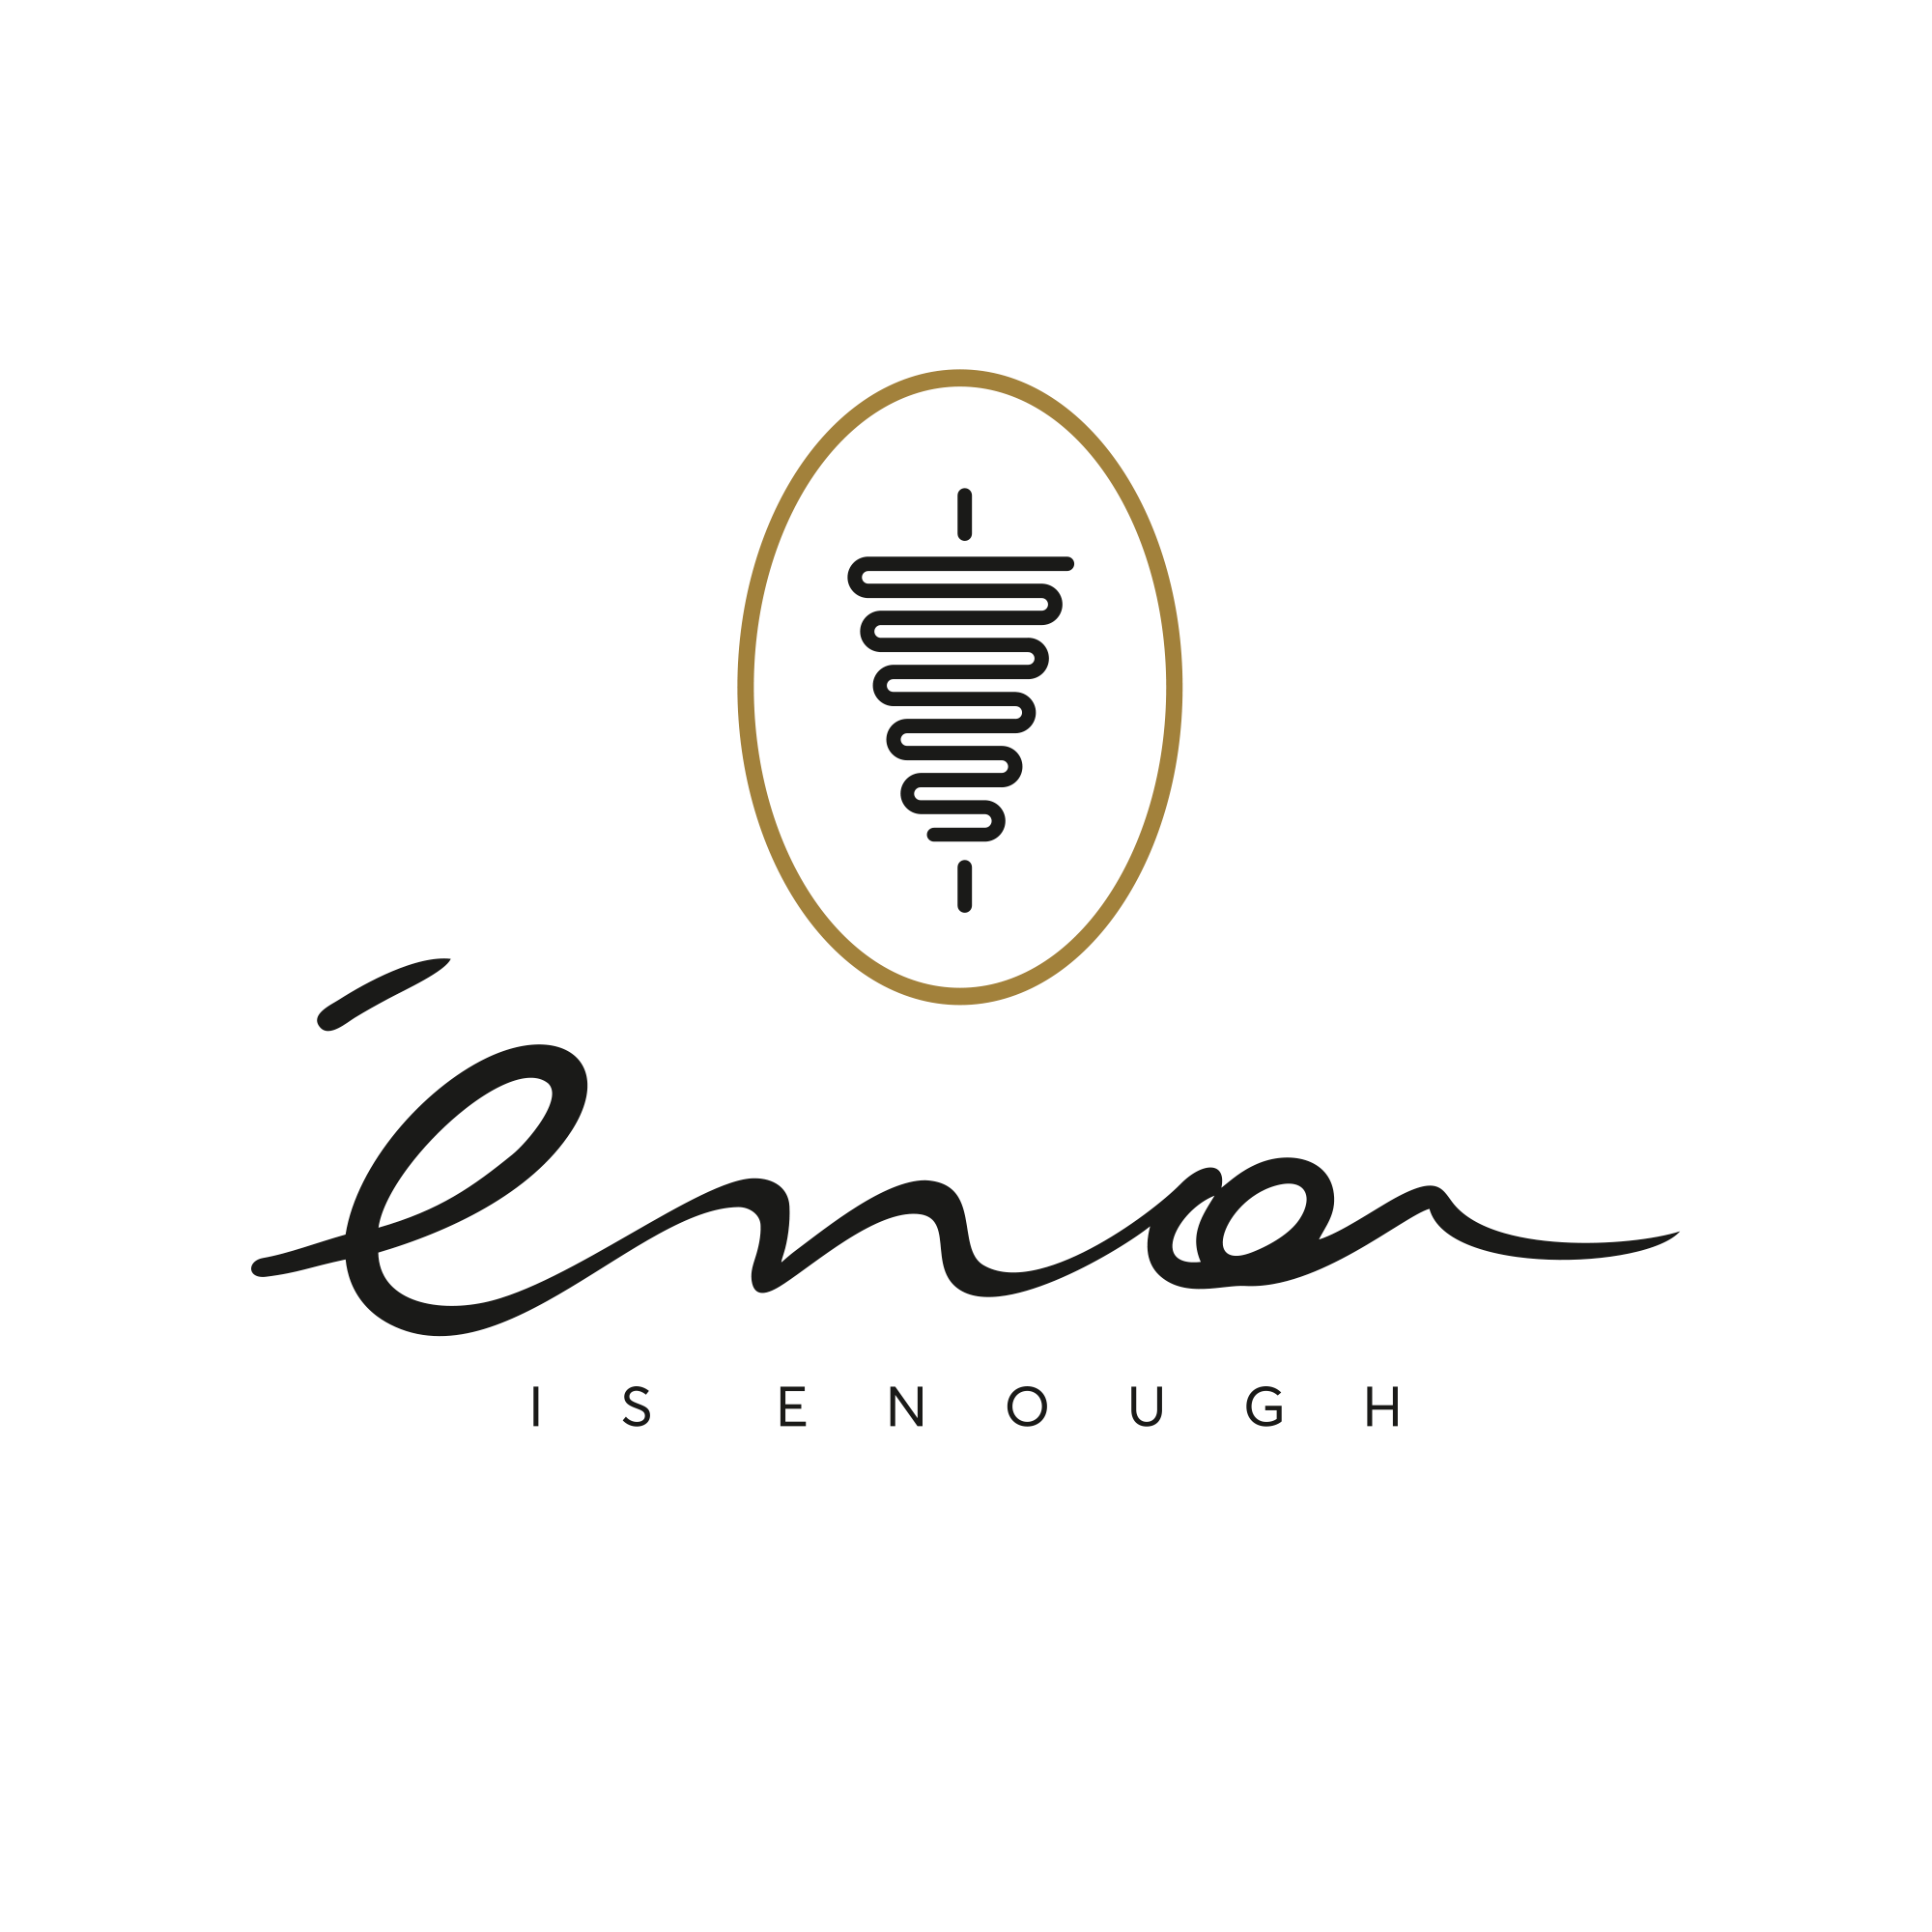 Ena is enough